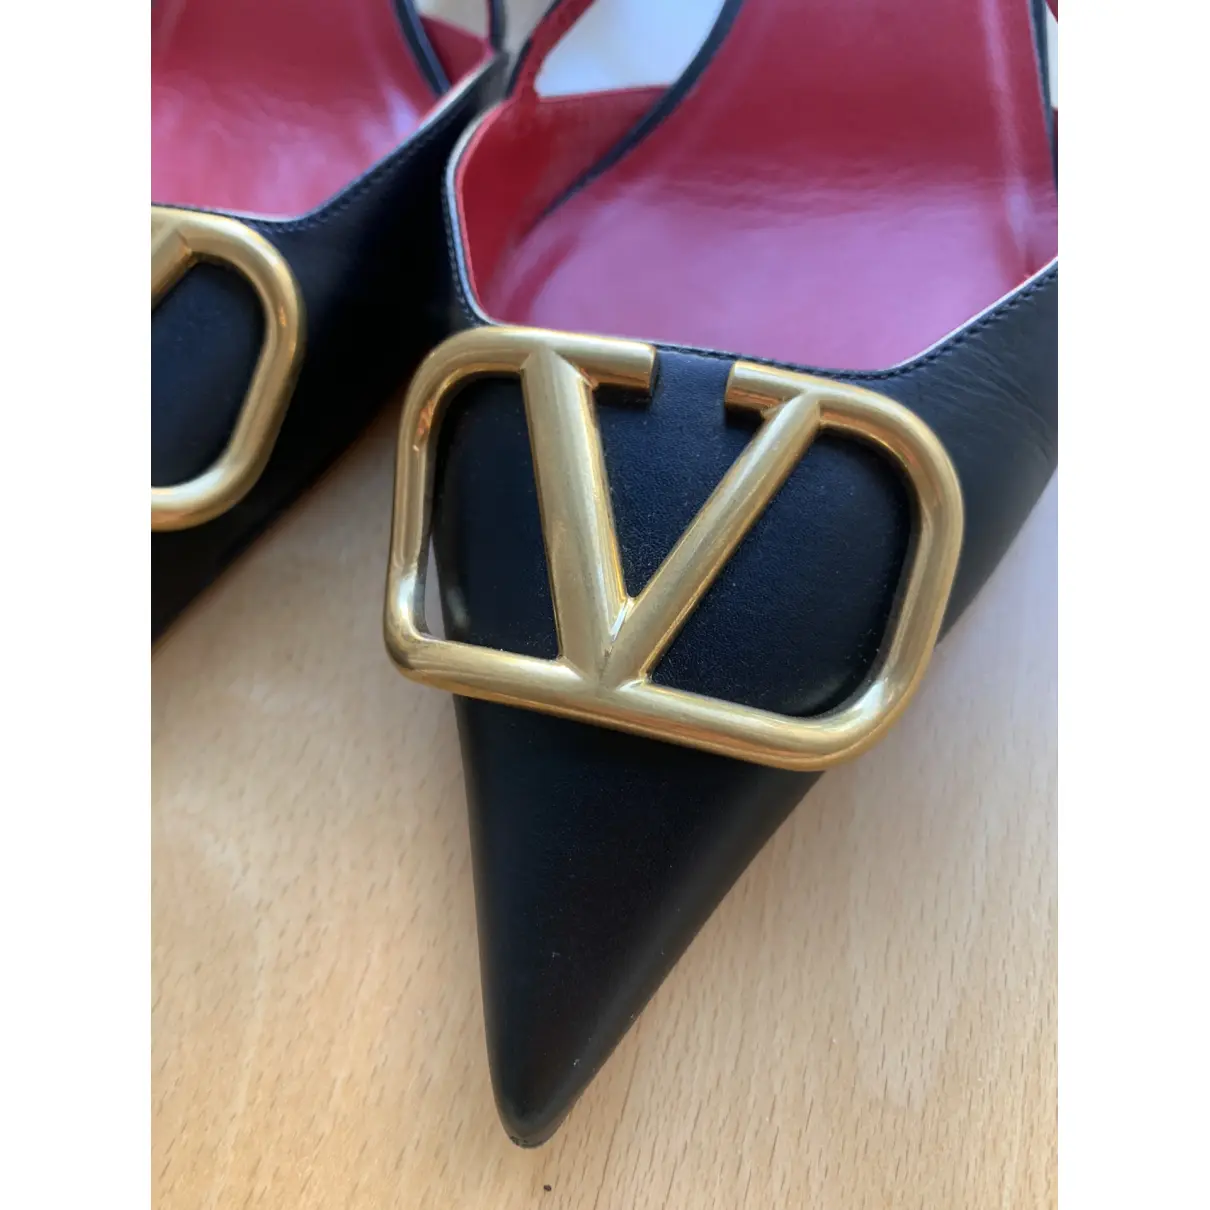 VLogo leather heels Valentino Garavani